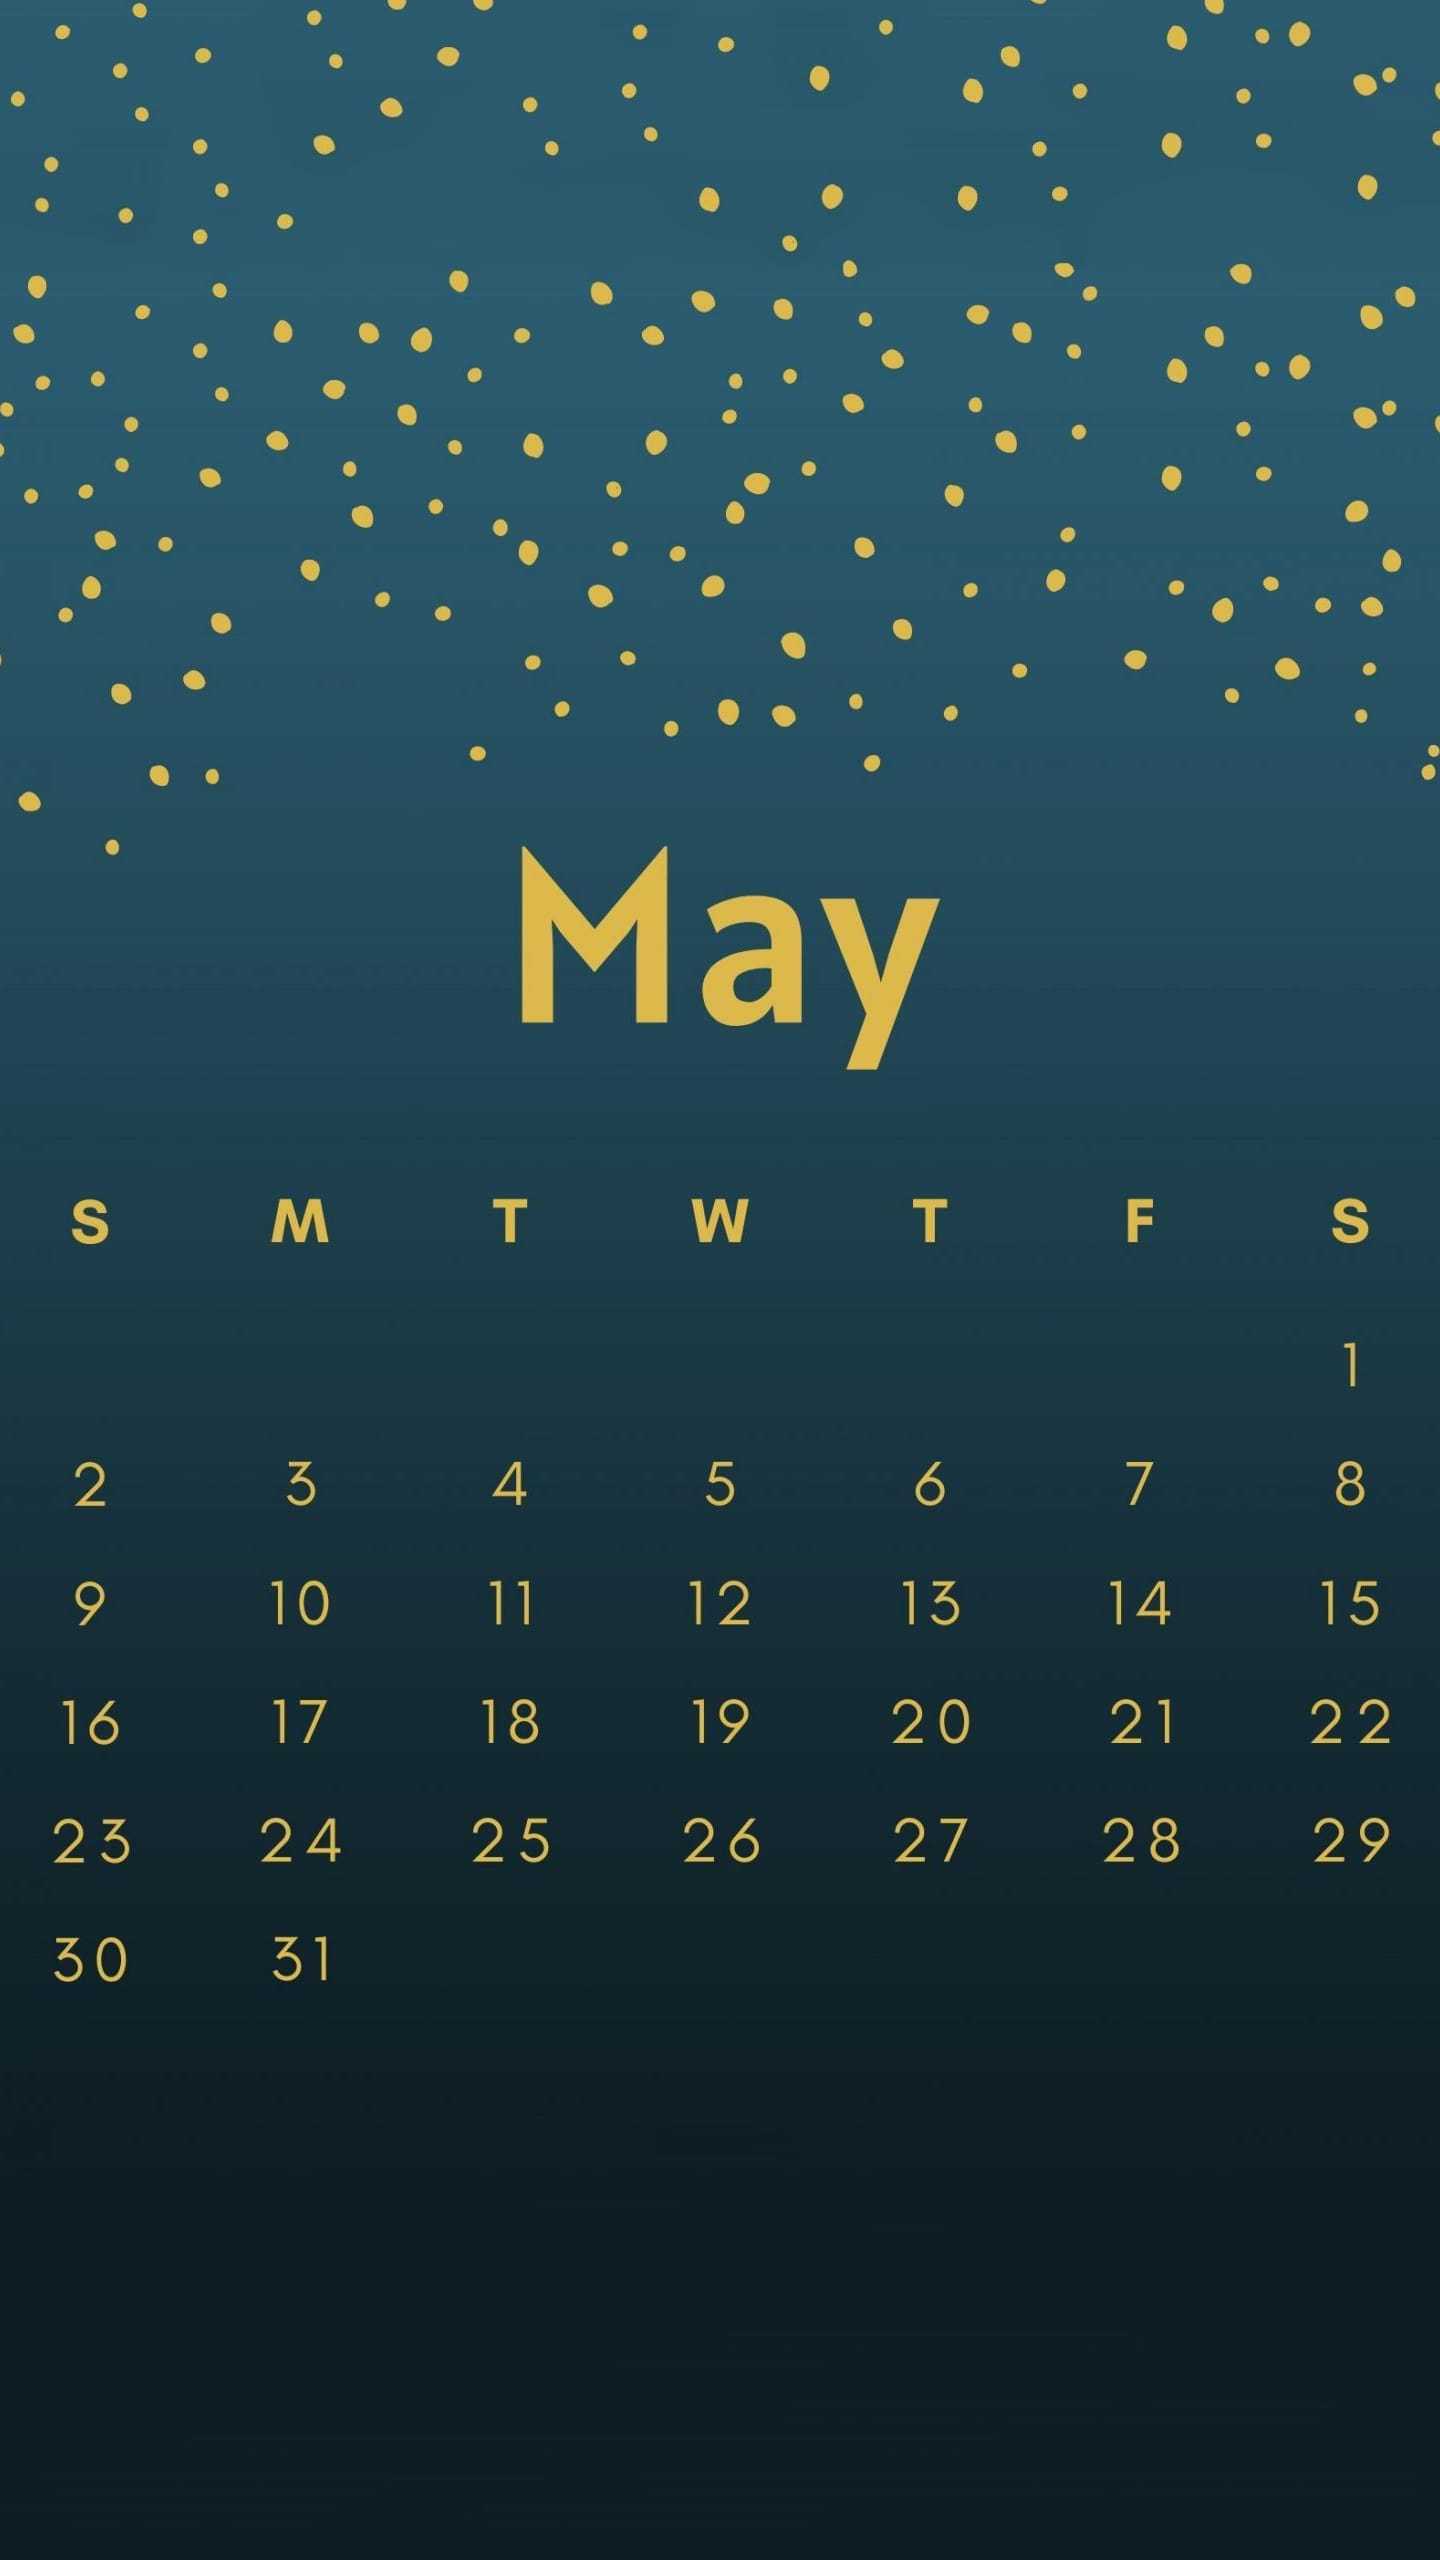 2021 May Calendar Wallpaper 1